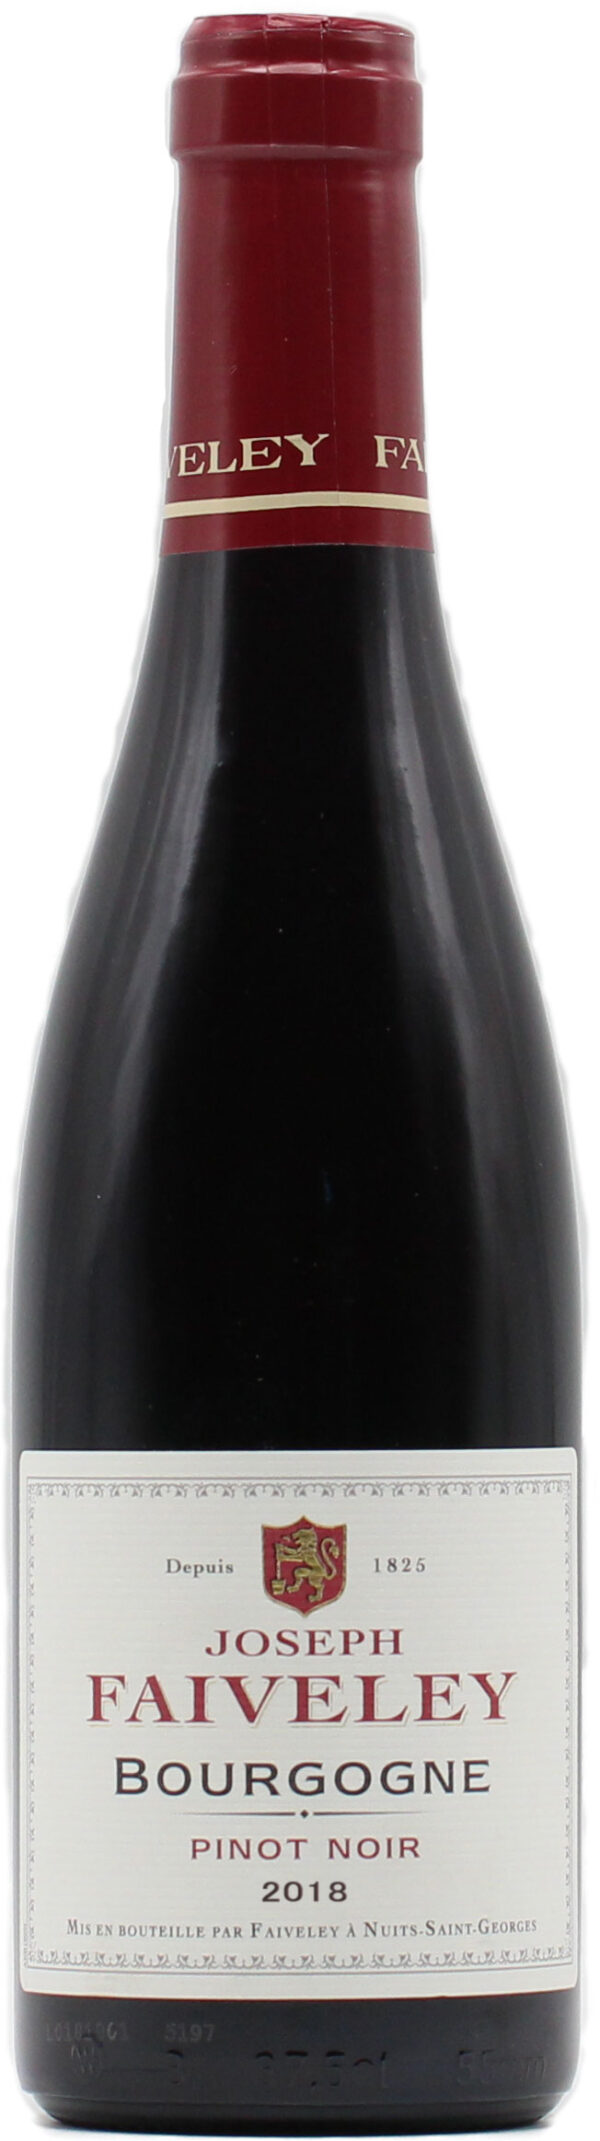 Domaine Faiveley - Bourgogne Pinot Noir 'Joseph Faiveley' 2020 37.5cl Bottle